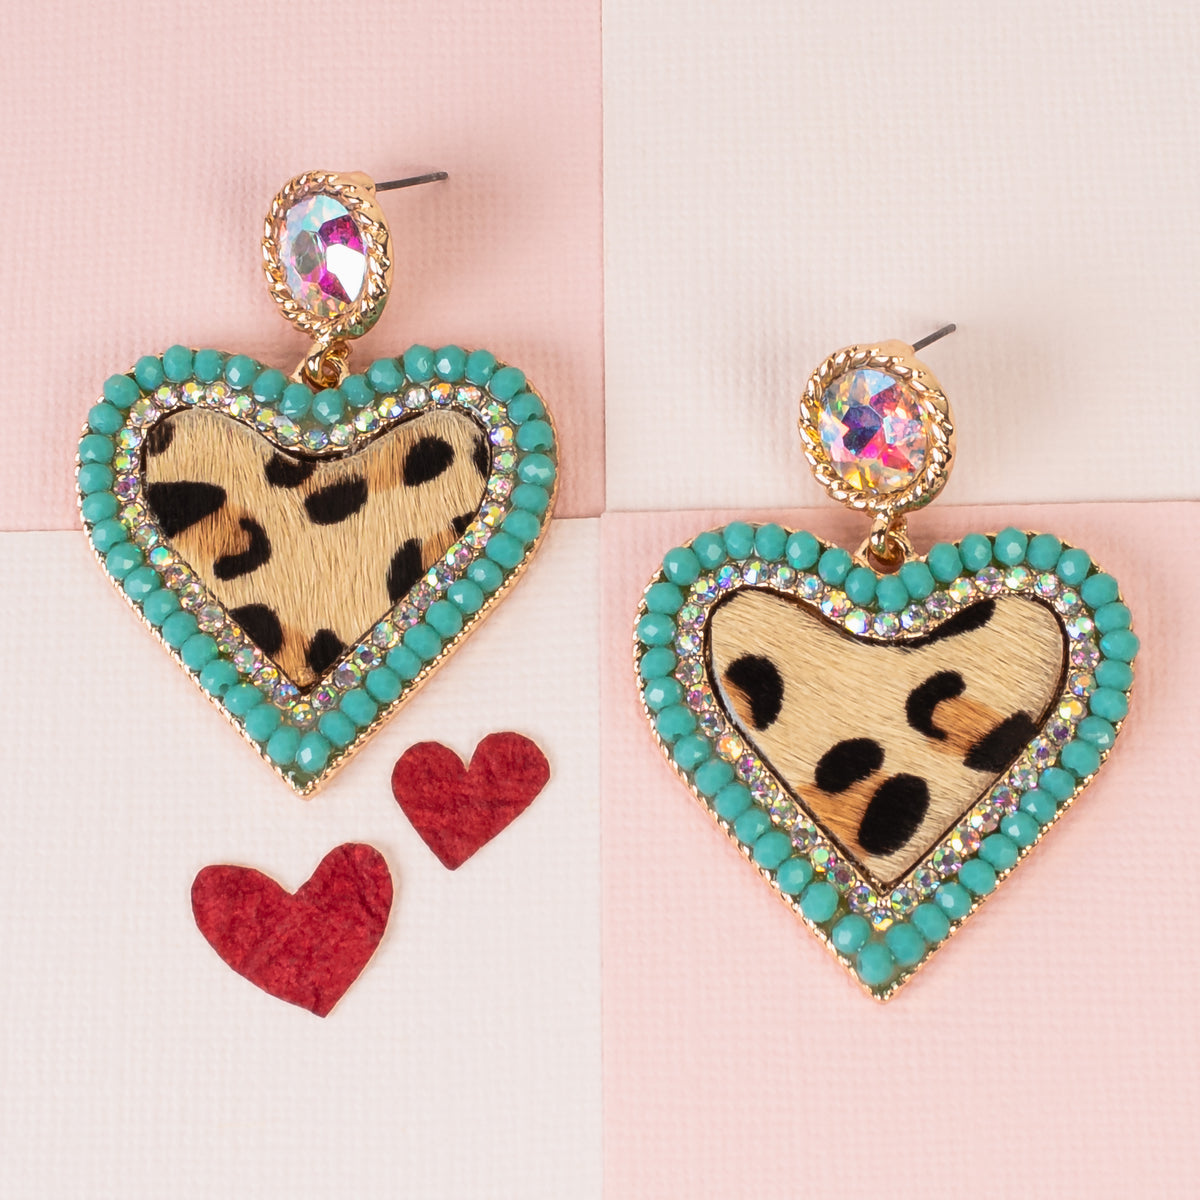 93164 - Animal Print Heart Earrings - Turquoise